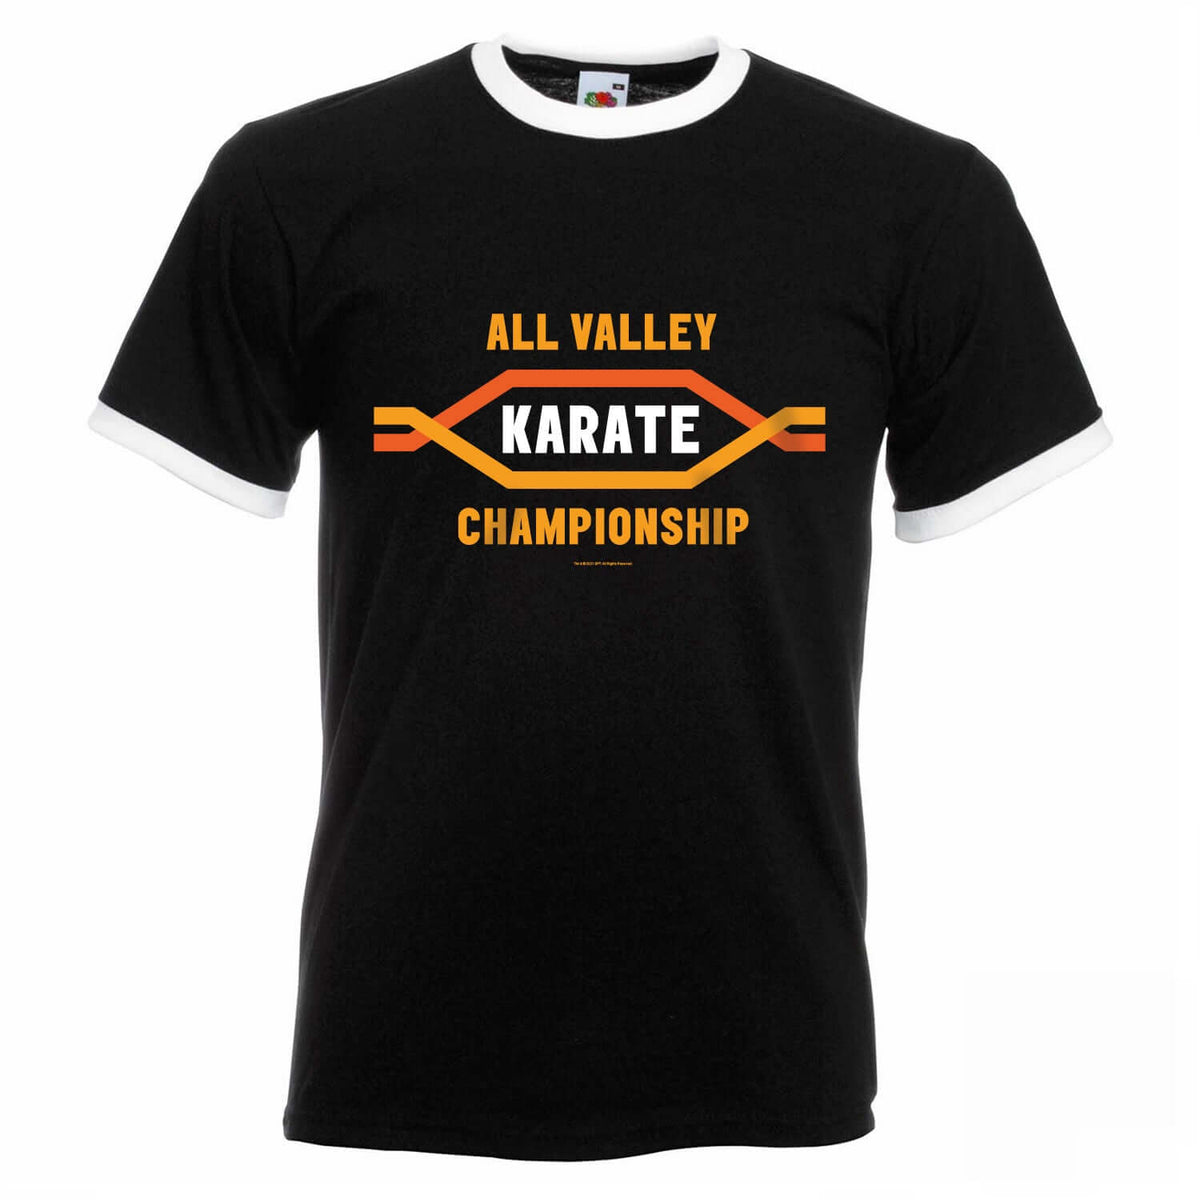 All Valley Championship Black Ringer Tee